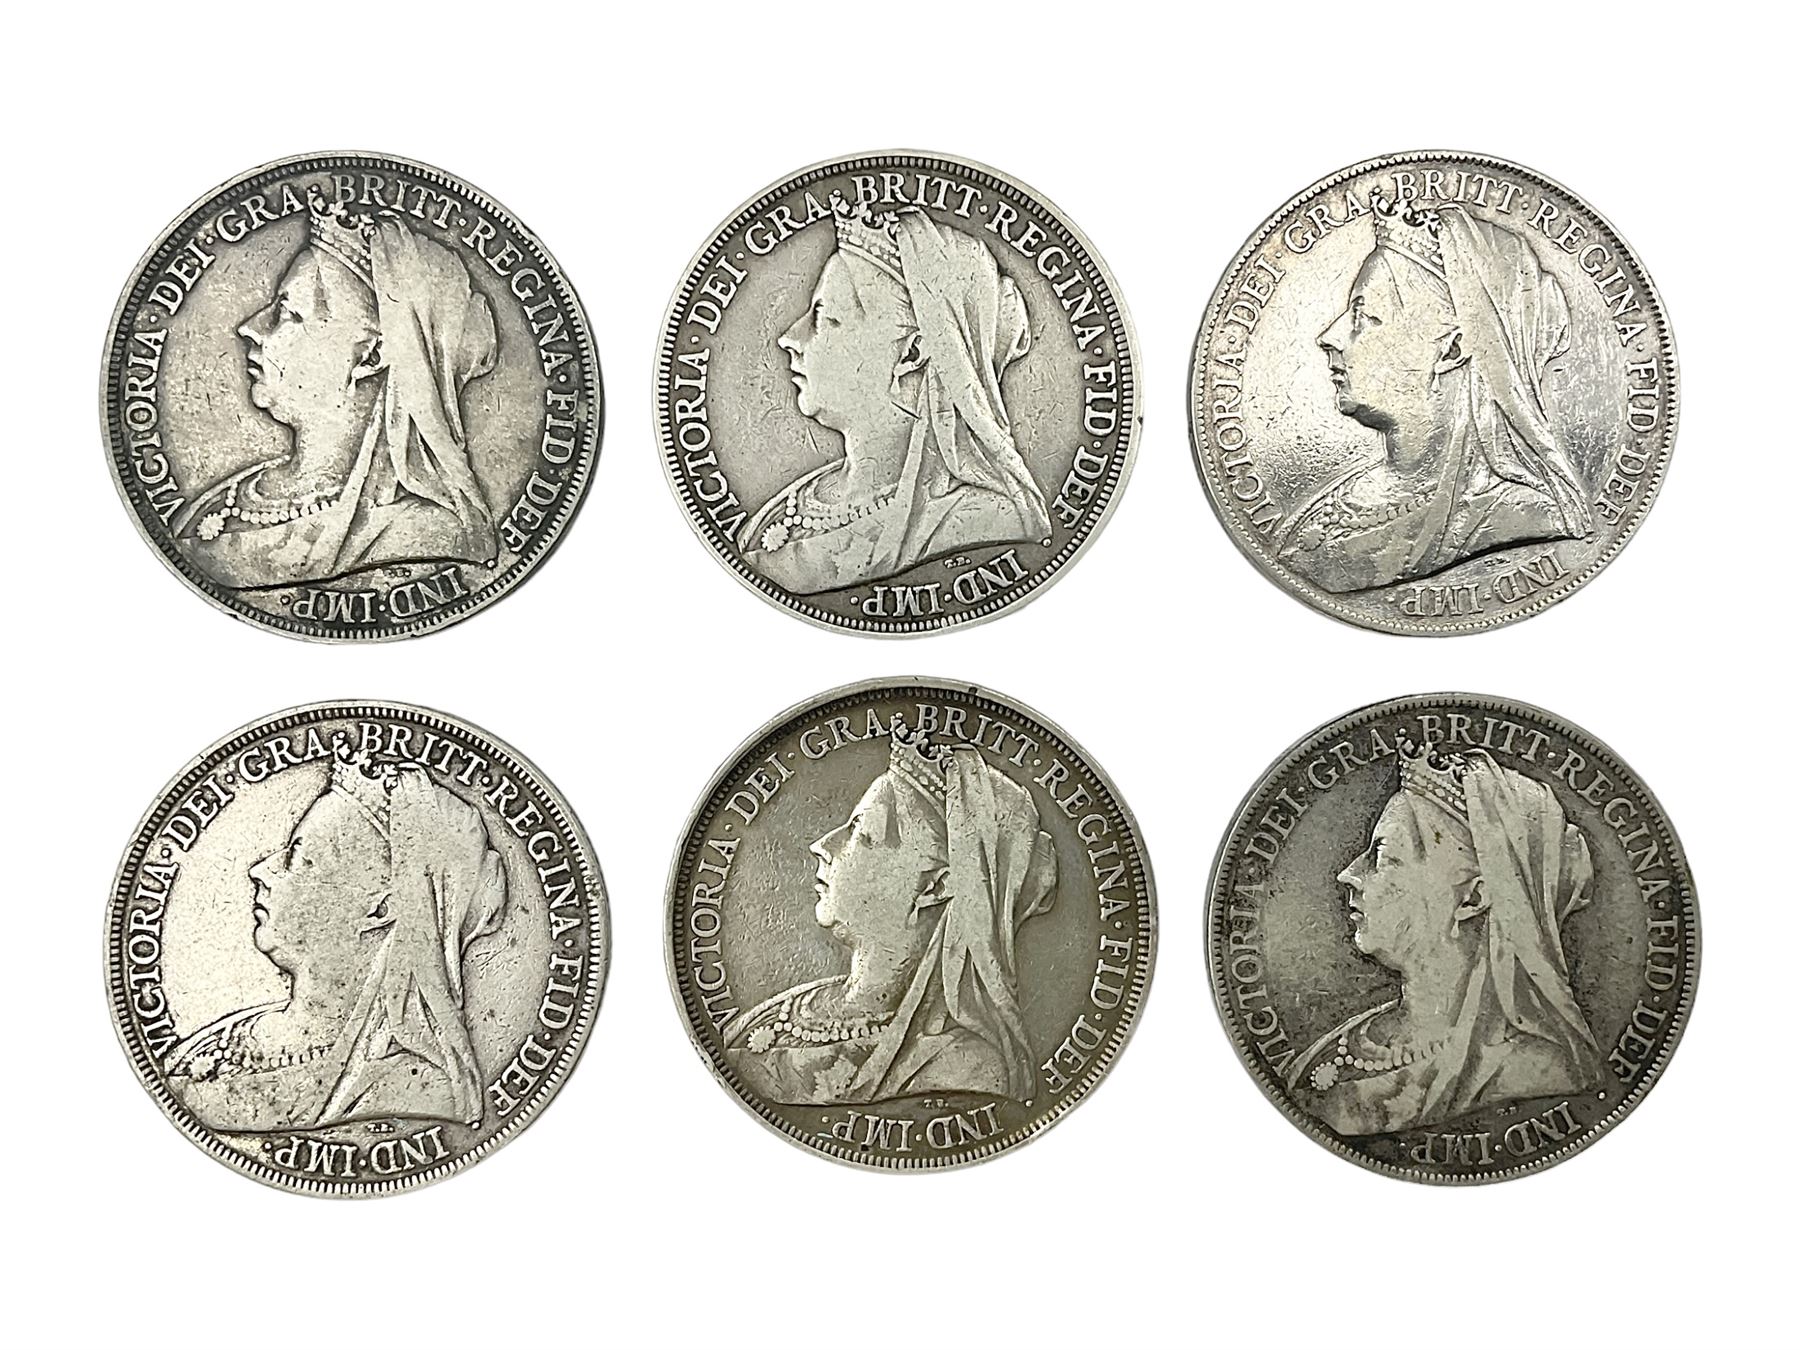 Six Queen Victoria silver crown coins